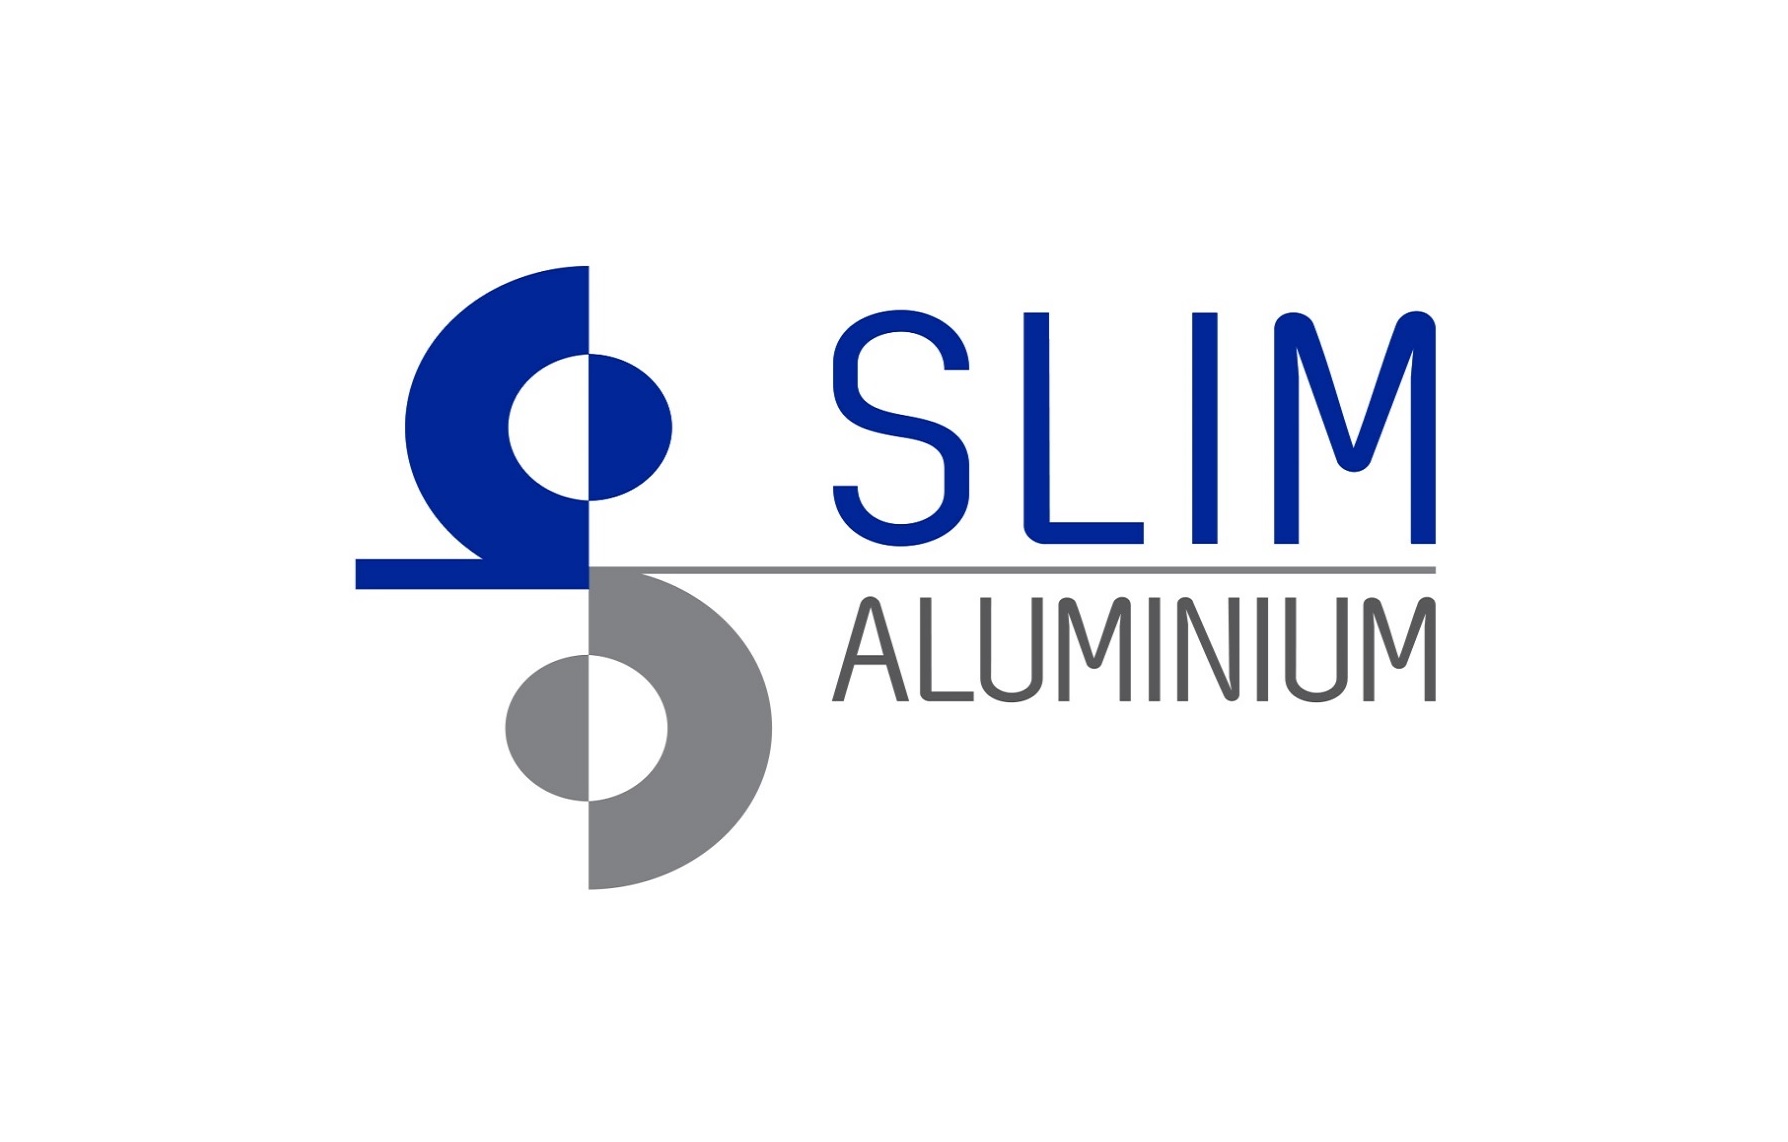 Shareholders believe in Slim Aluminium